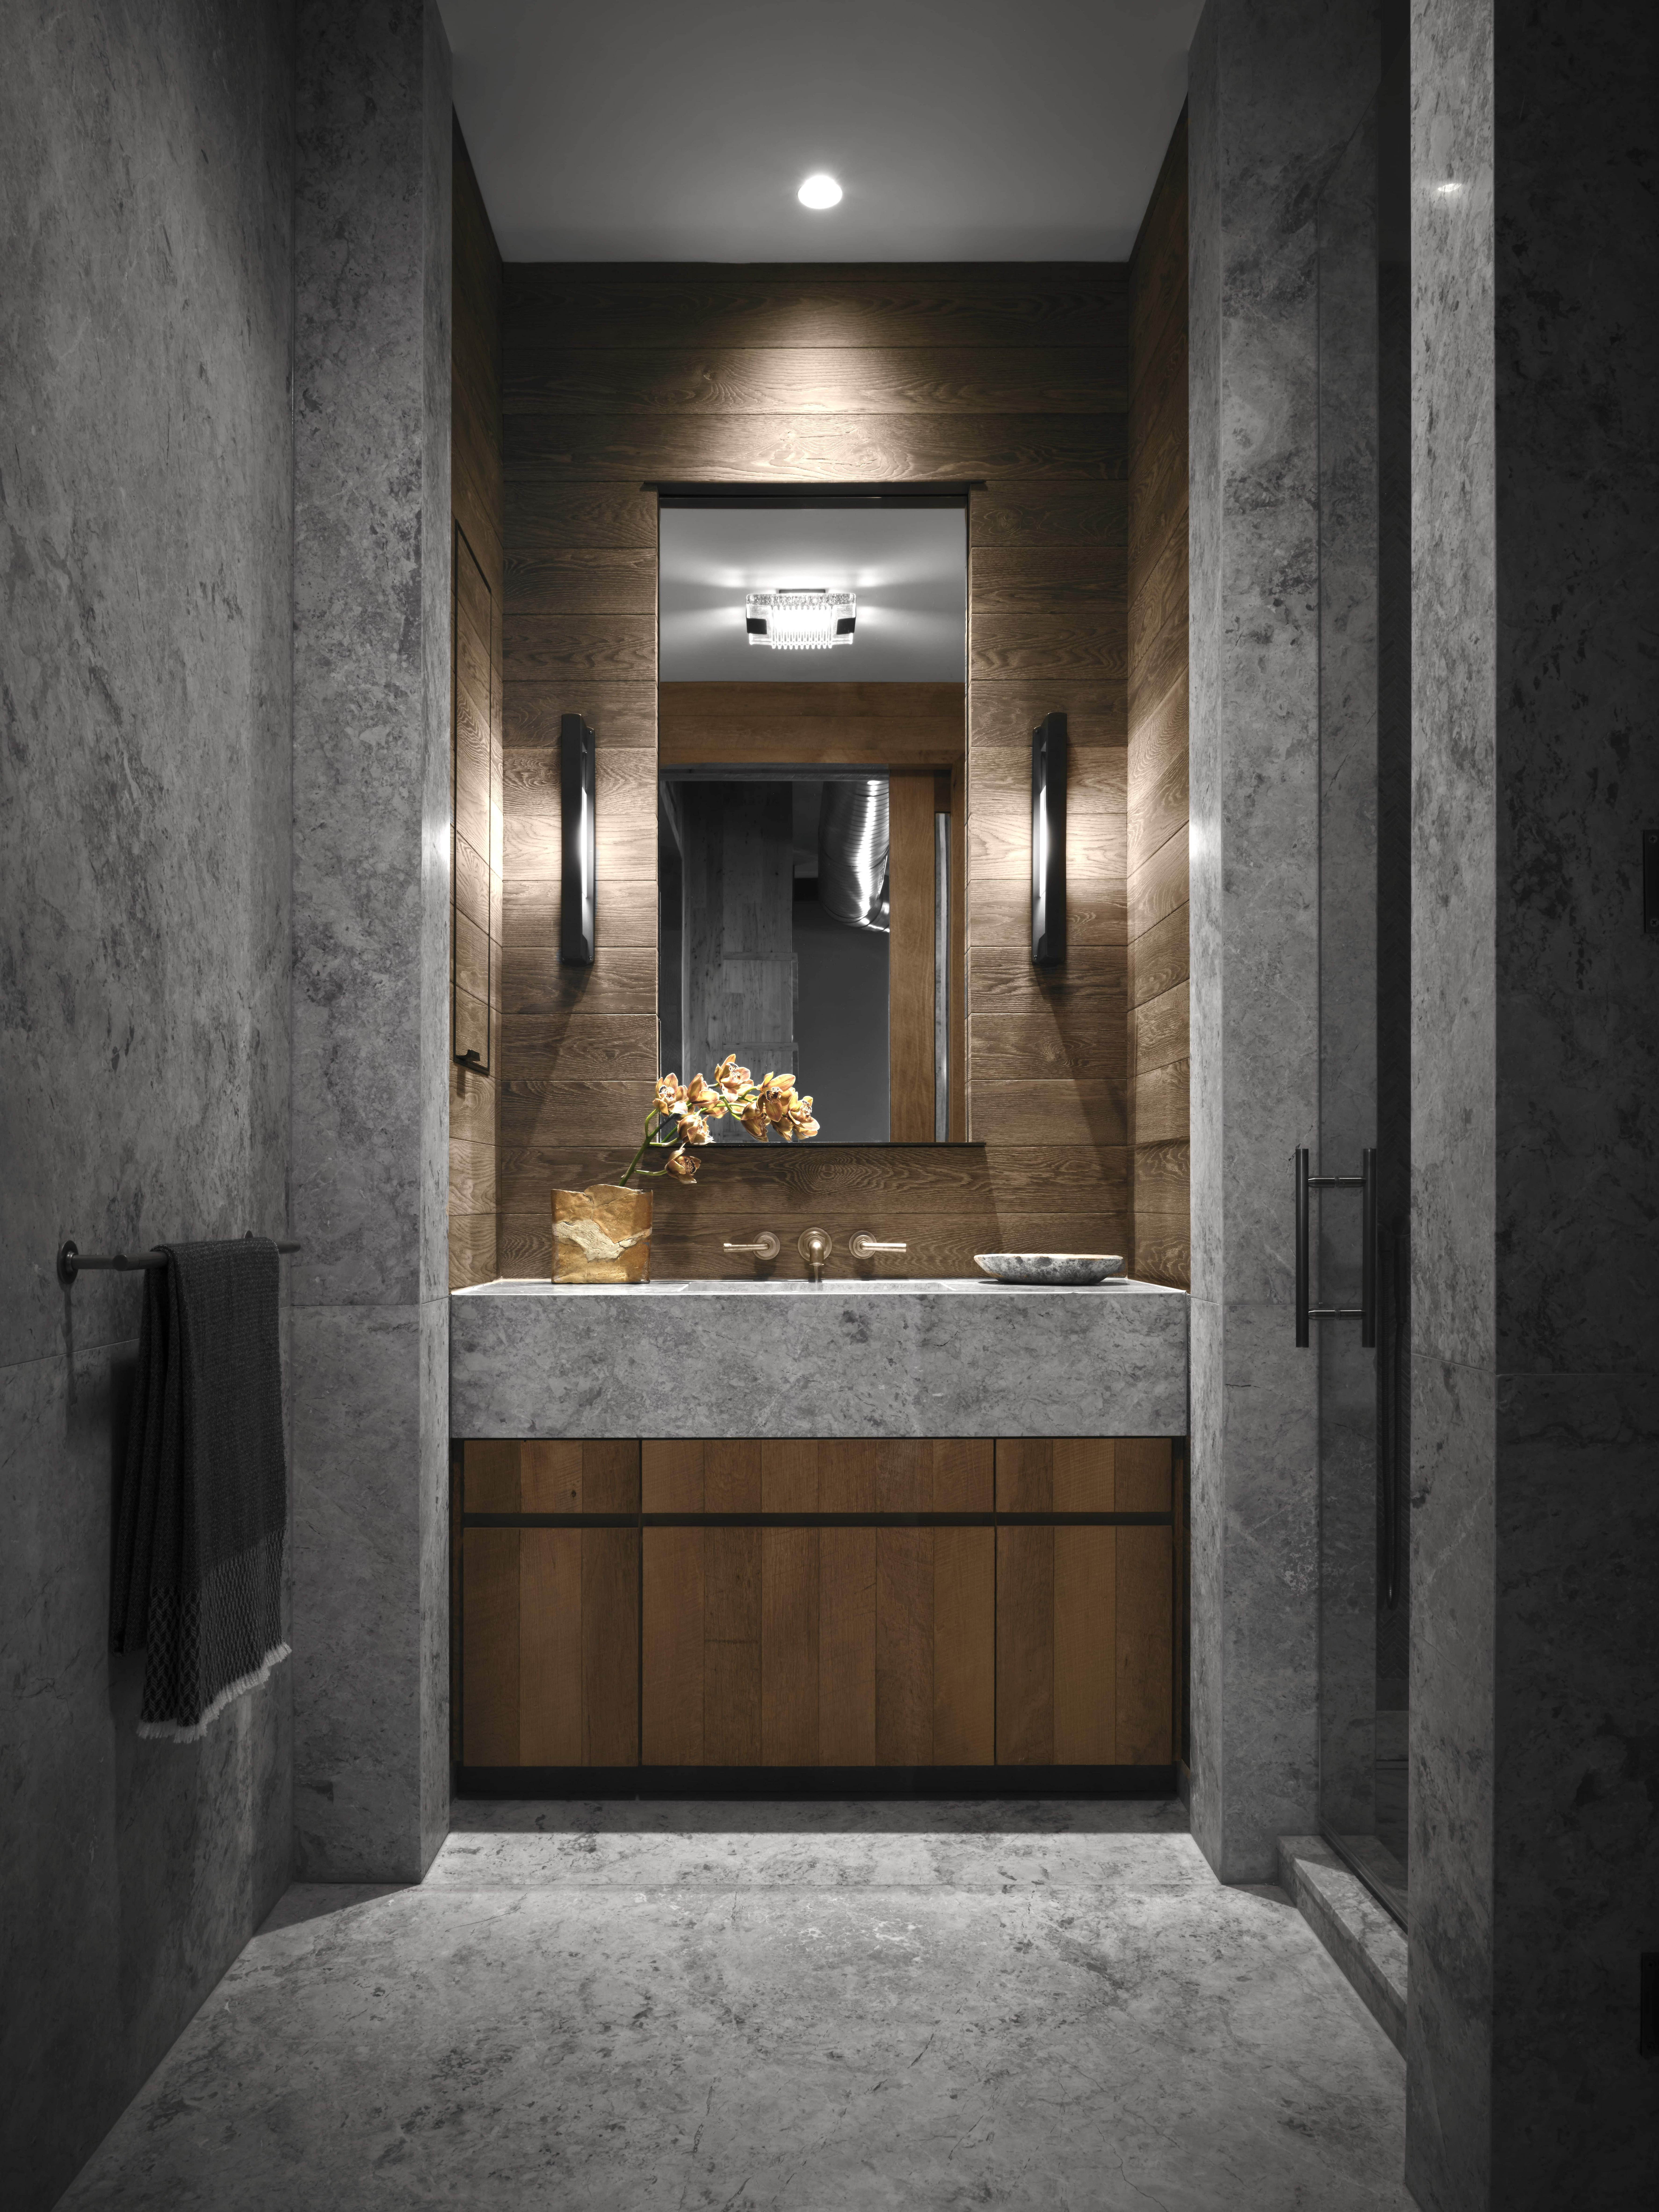 Office Bathroom Design Ideas - 28 Pictures